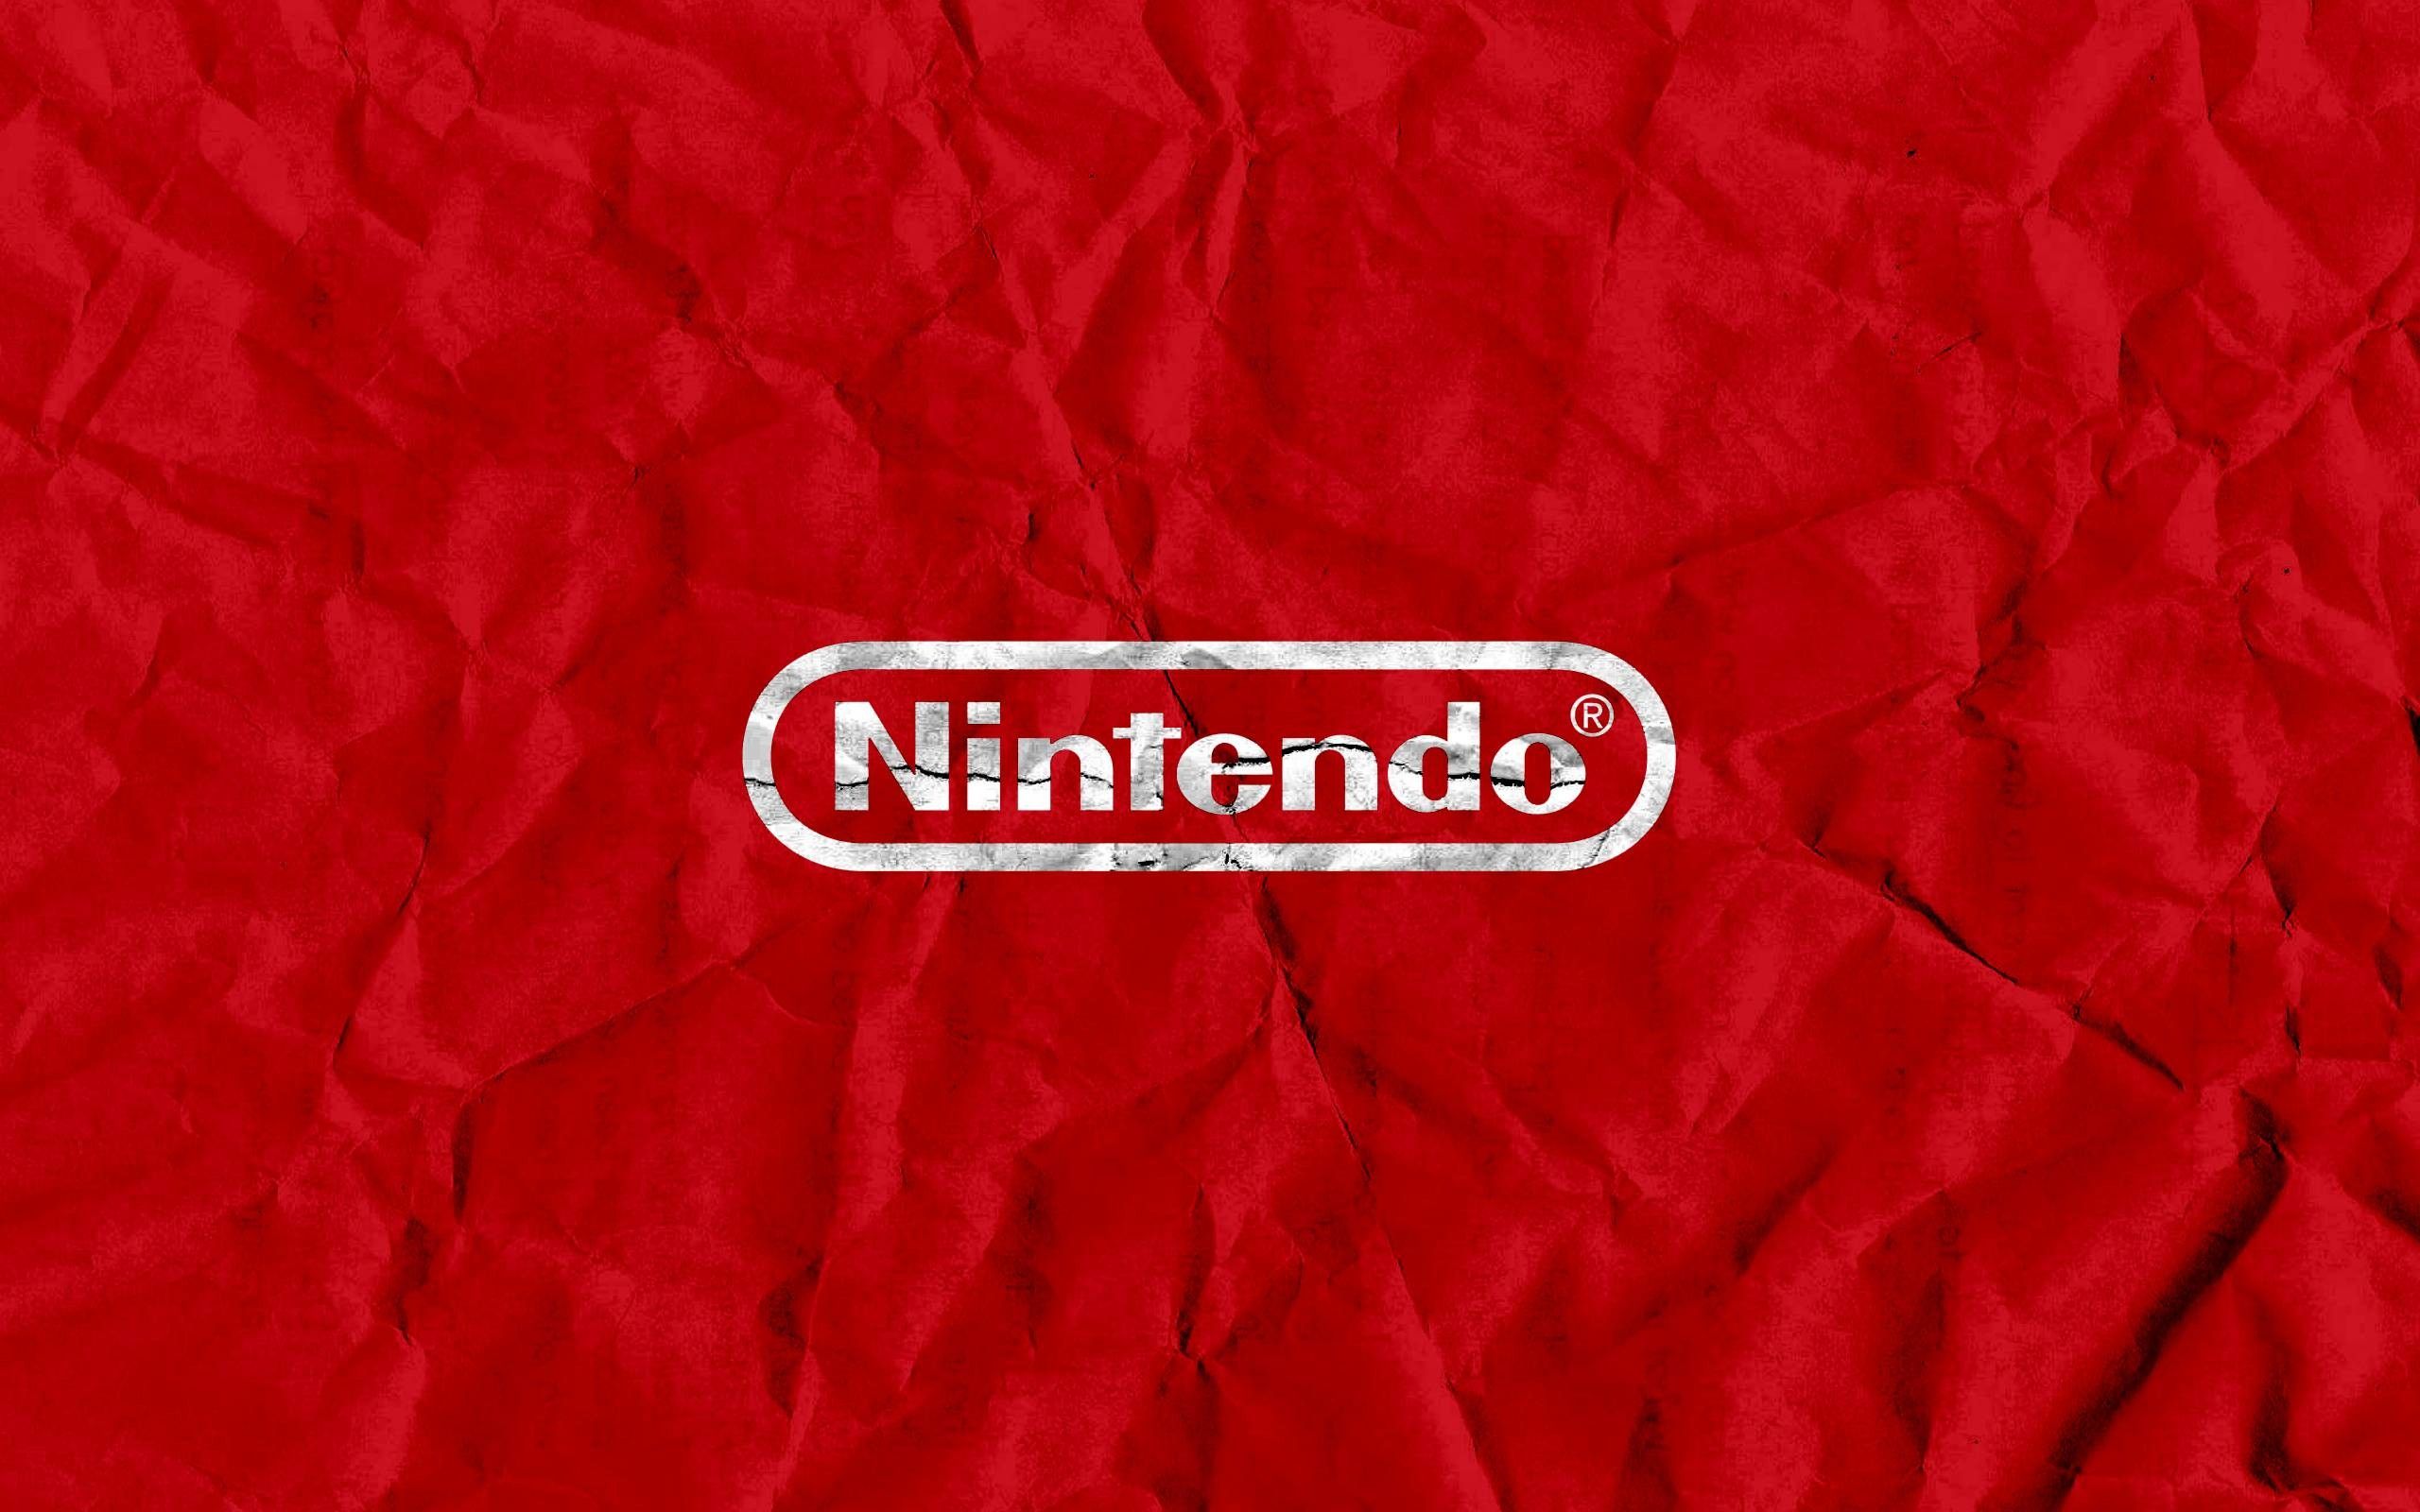 Nintendo Wallpaper background picture